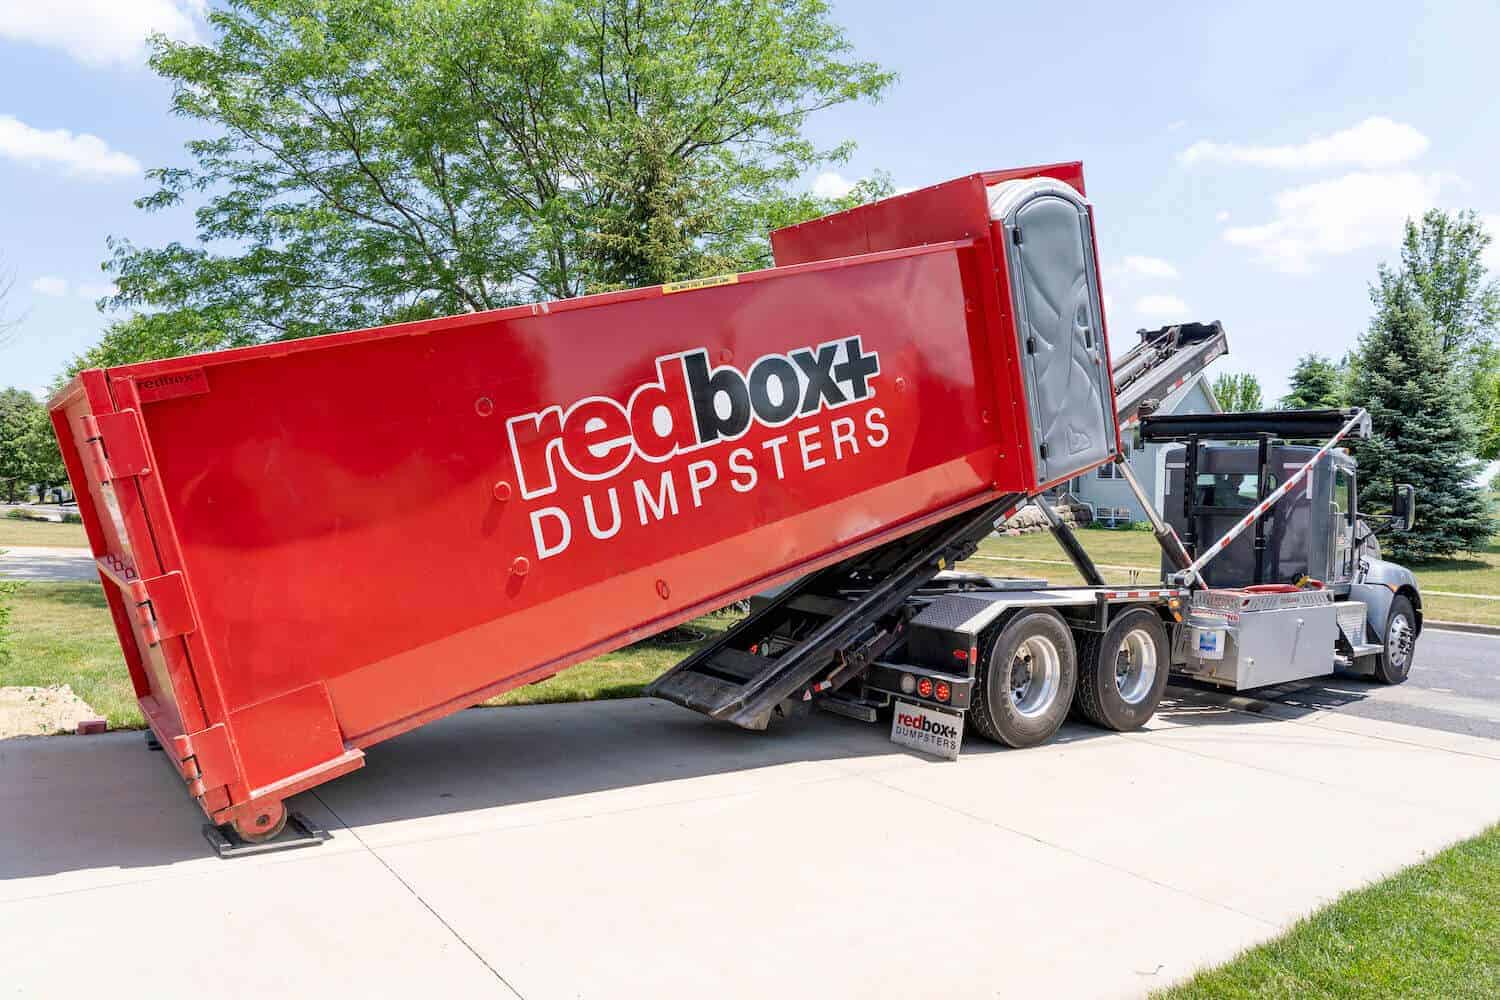 roll off dumpster rental in Gainesville georgia